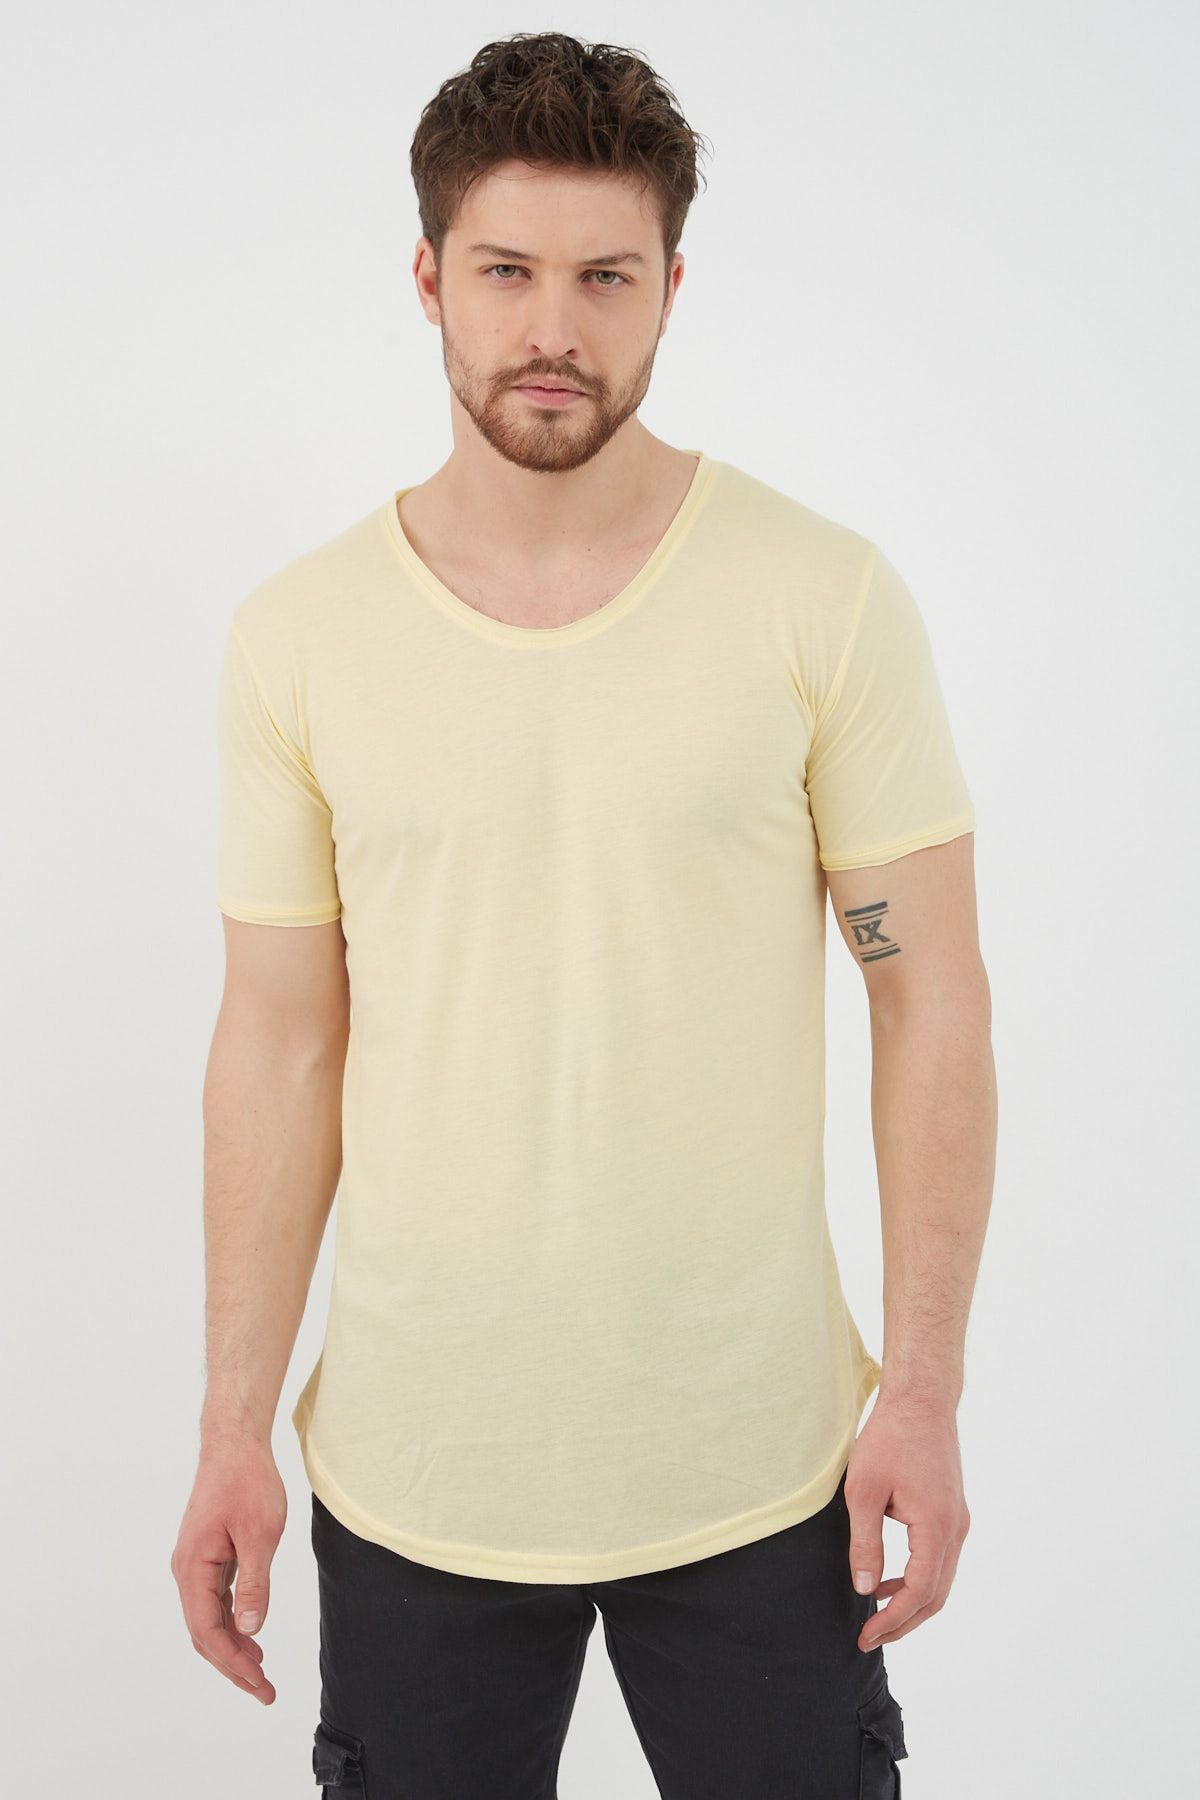 Tarz Cool Erkek Ay Işığı Sarı Pis Yaka Salaş T-shirt-tcps001r65s